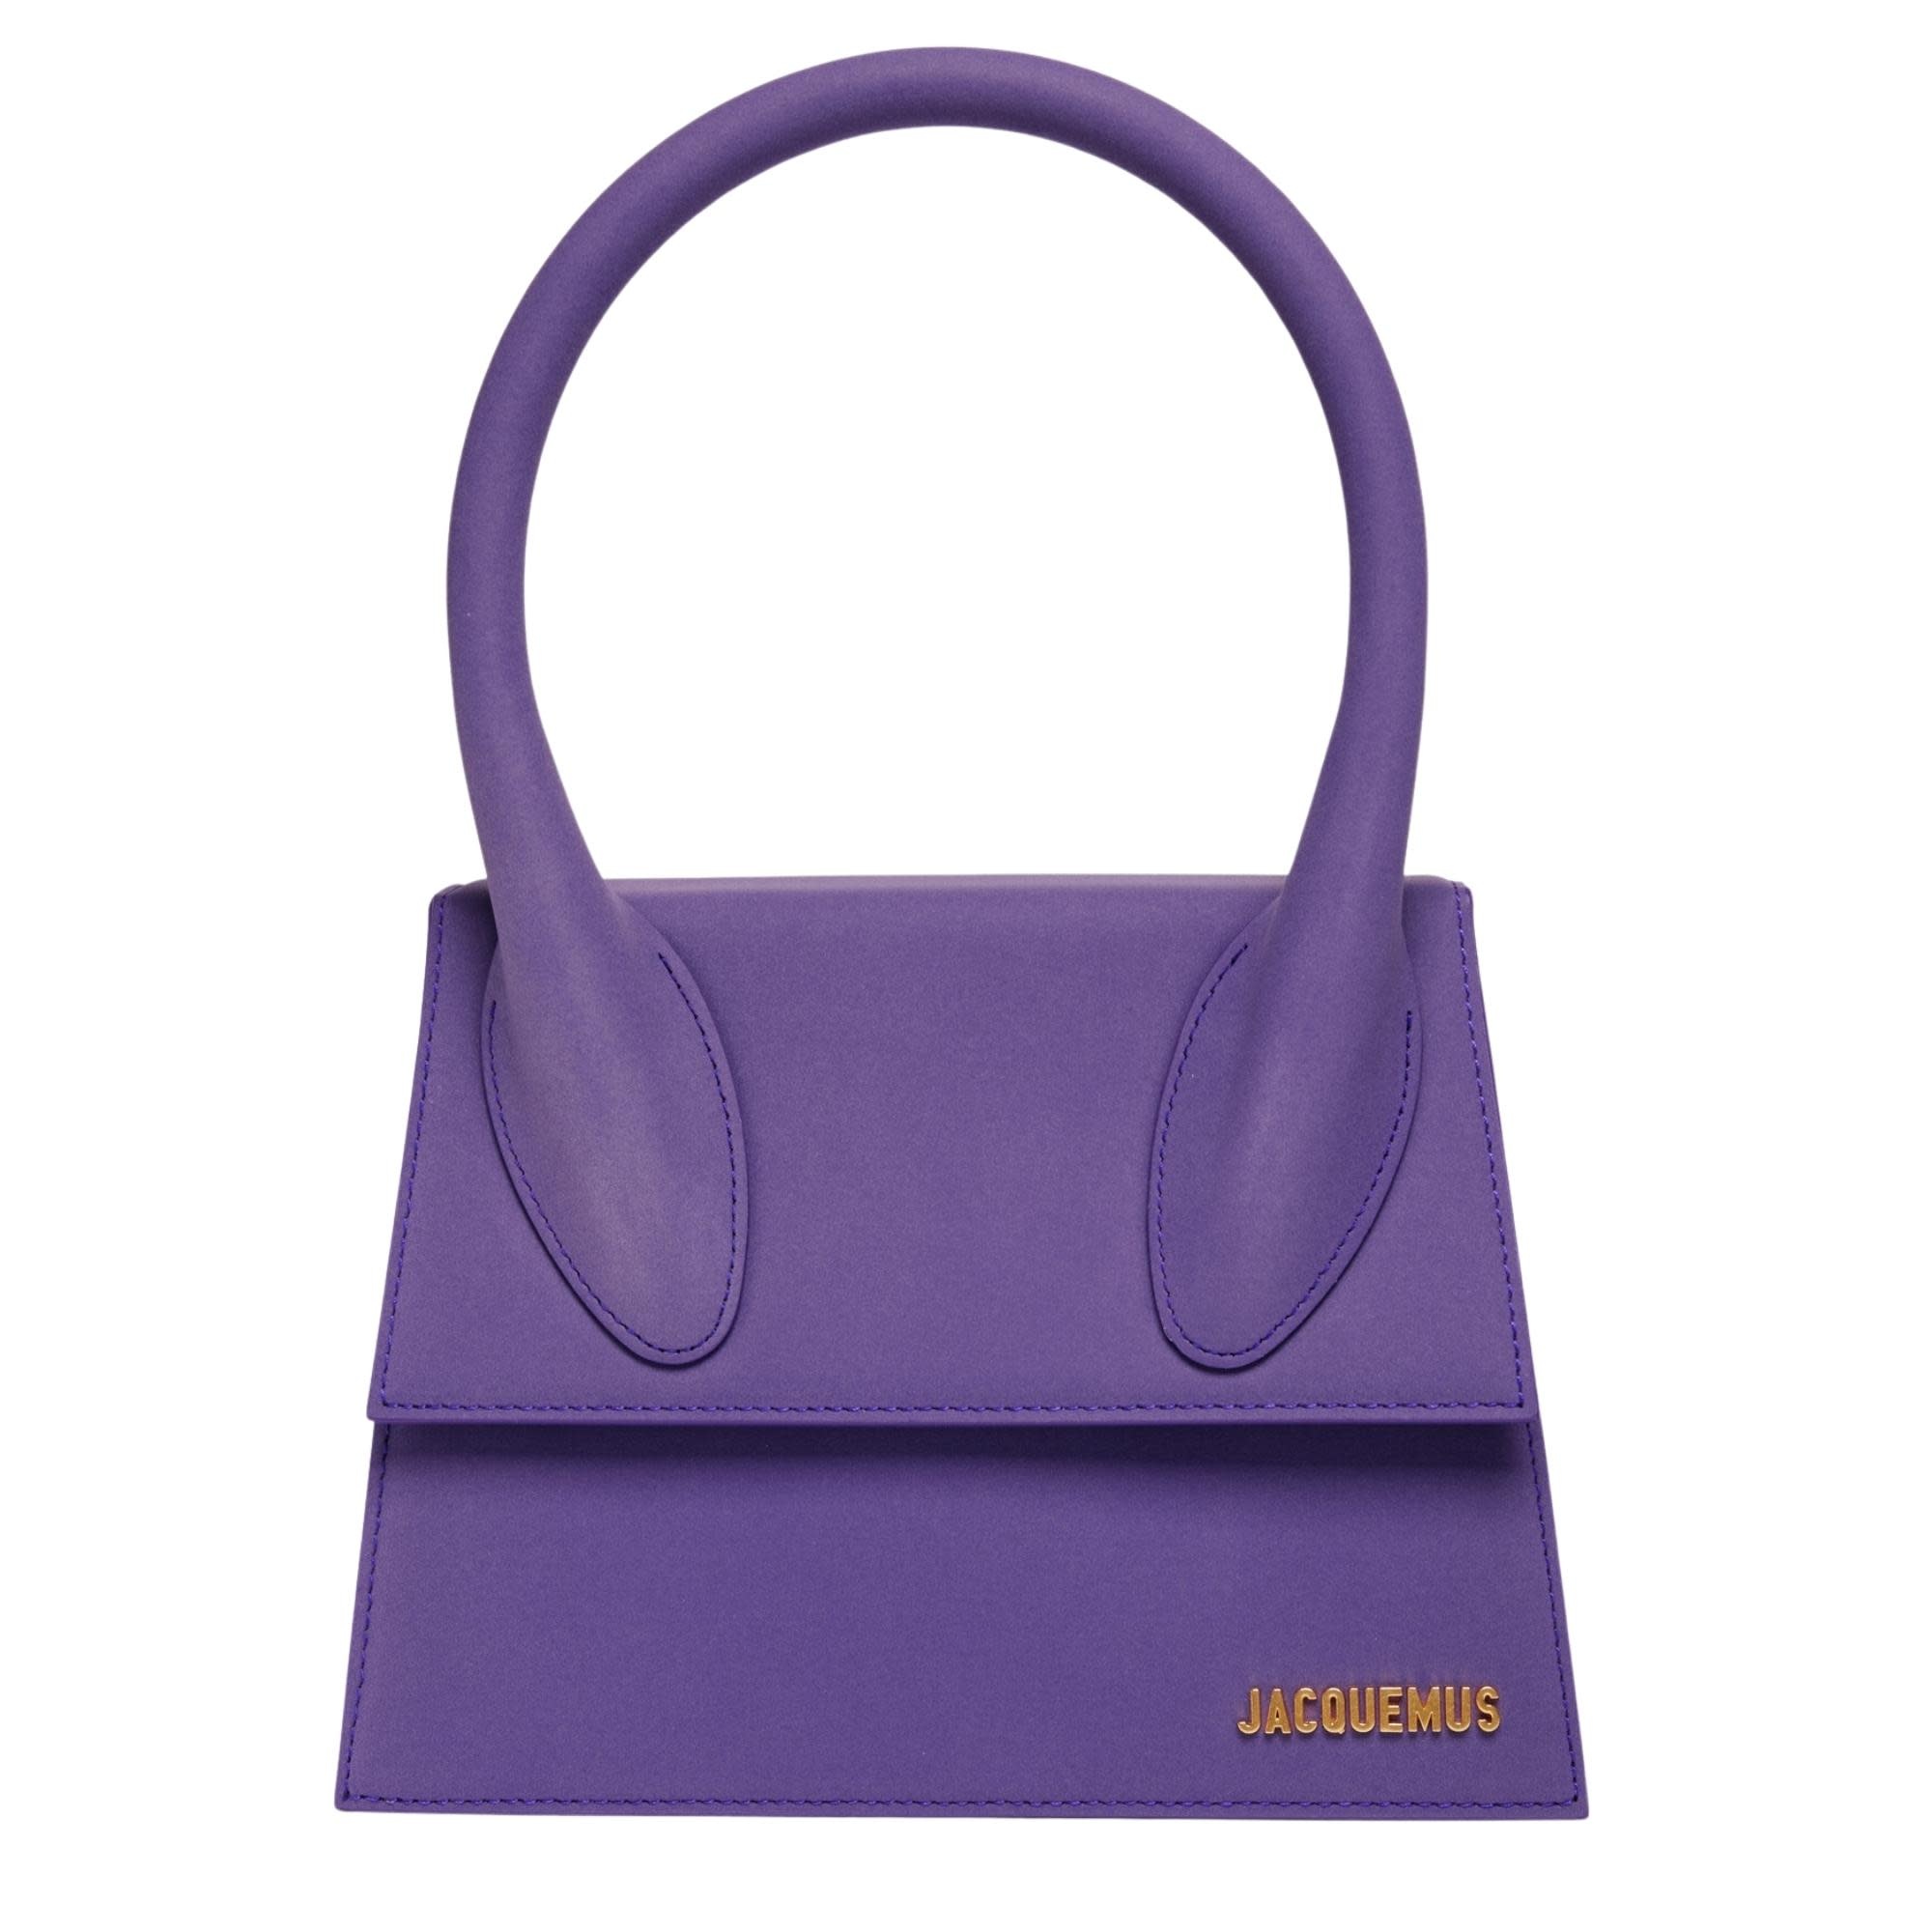 Jacquemus Le Chiquito Moyen Leather Top-Handle Bag, Purple, Women's, Handbags & Purses Top Handle Bags